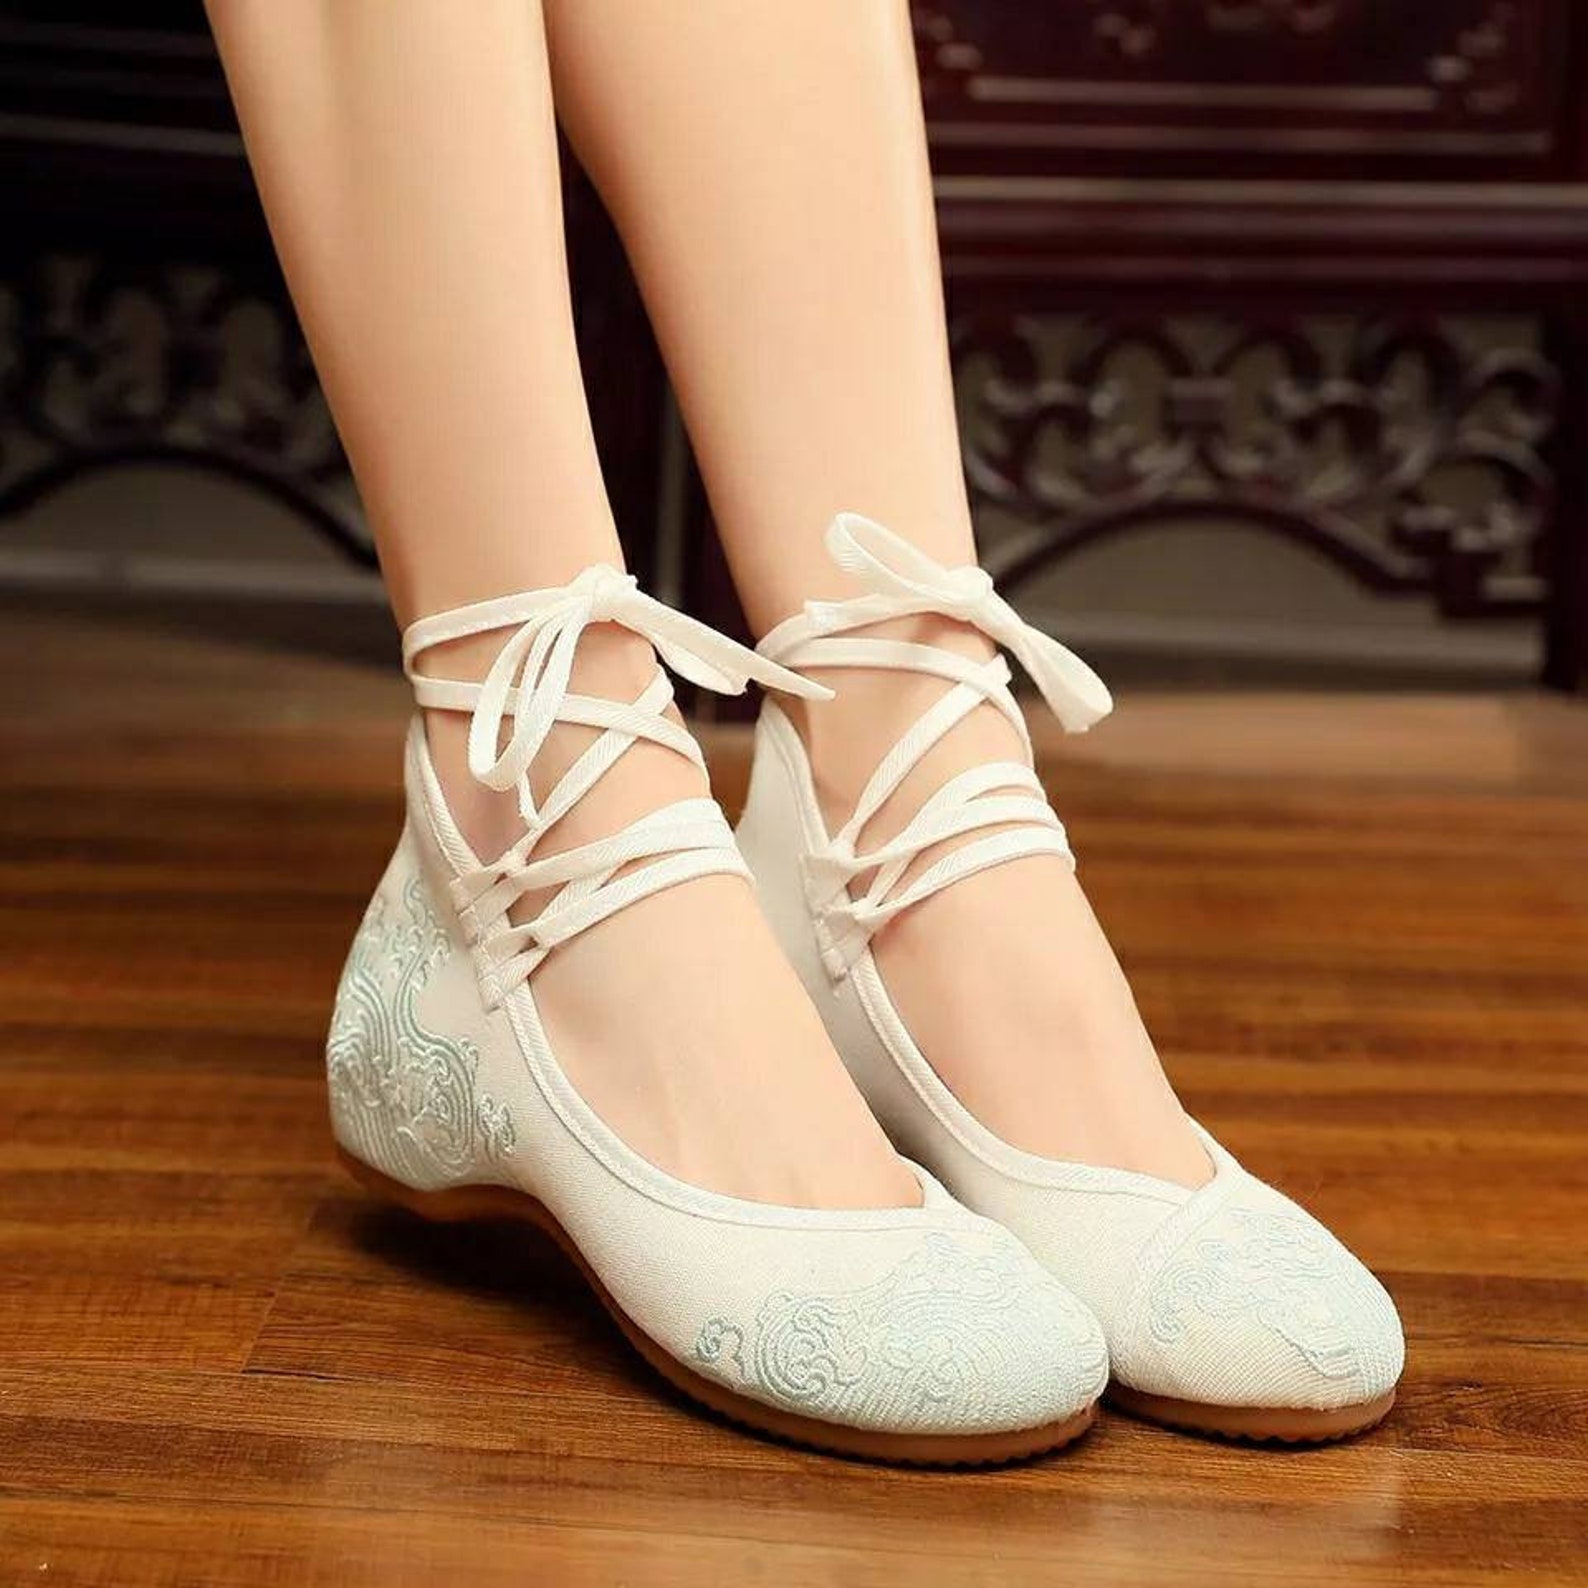 Hanfu shoes cotton shoes Chinese shoes hidden heels 4cm | Etsy